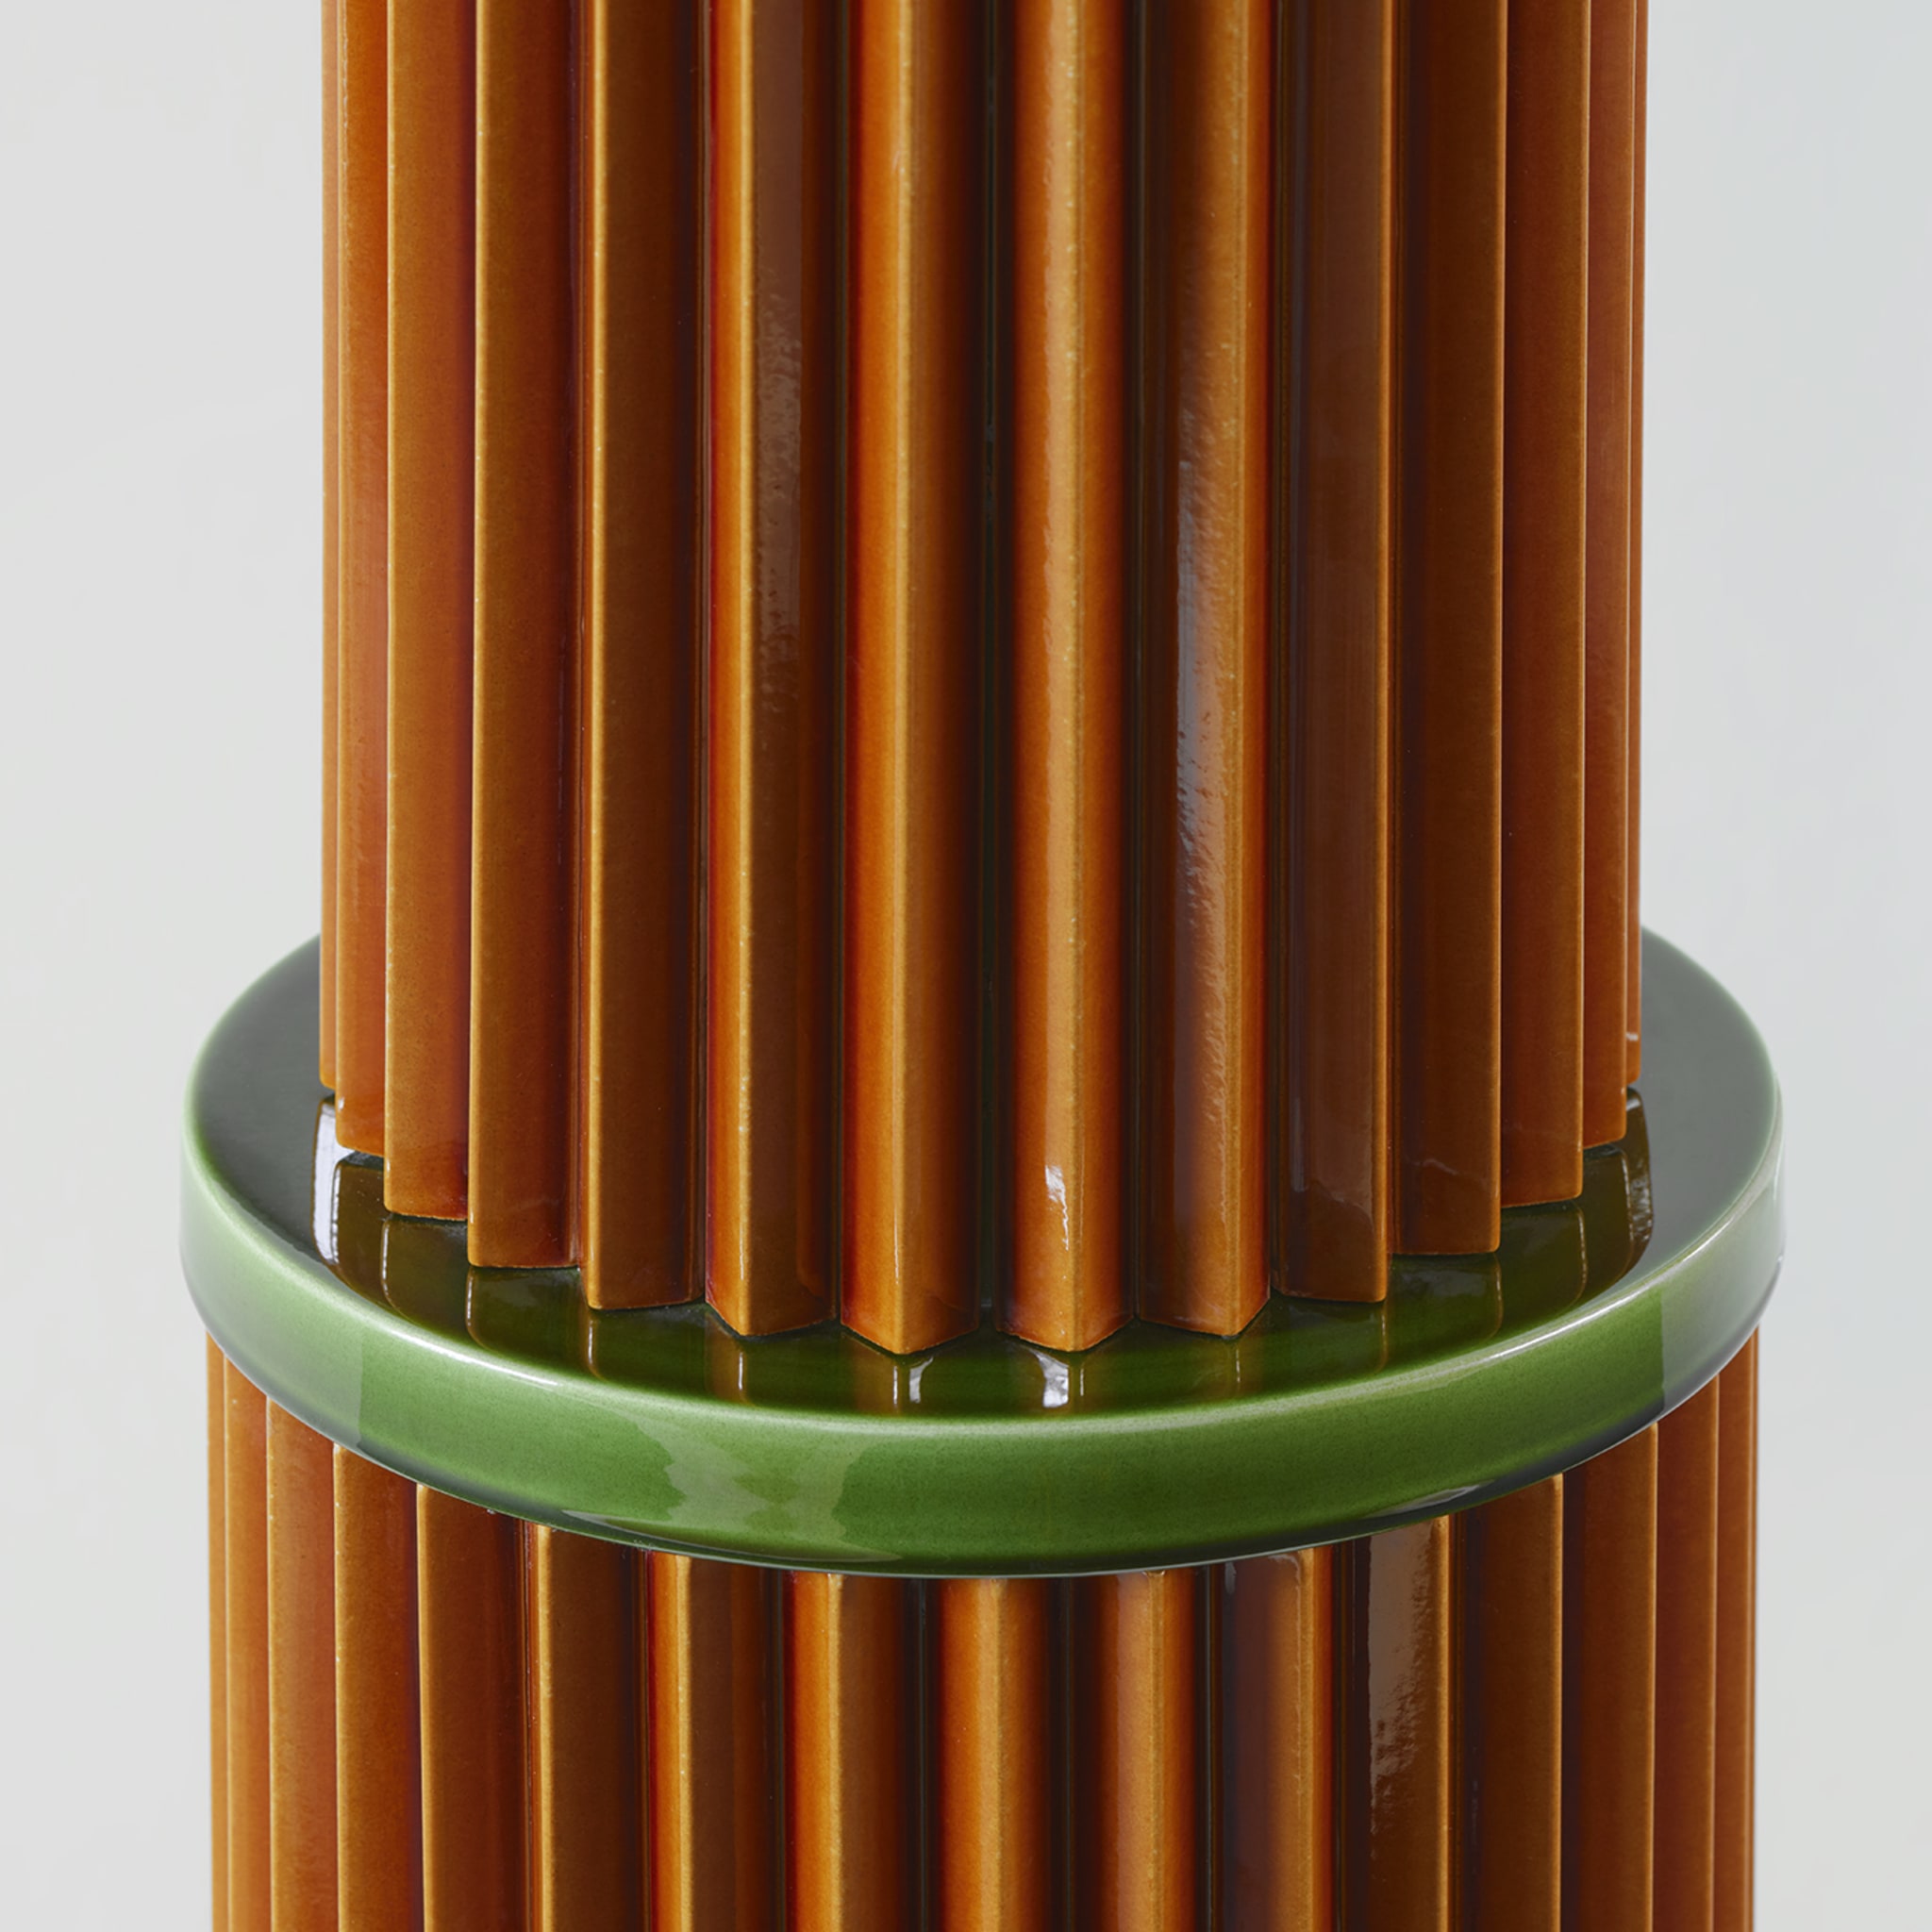 Rombini C Brown and Green Vase by Ronan & Erwan Bouroullec - Alternative view 2